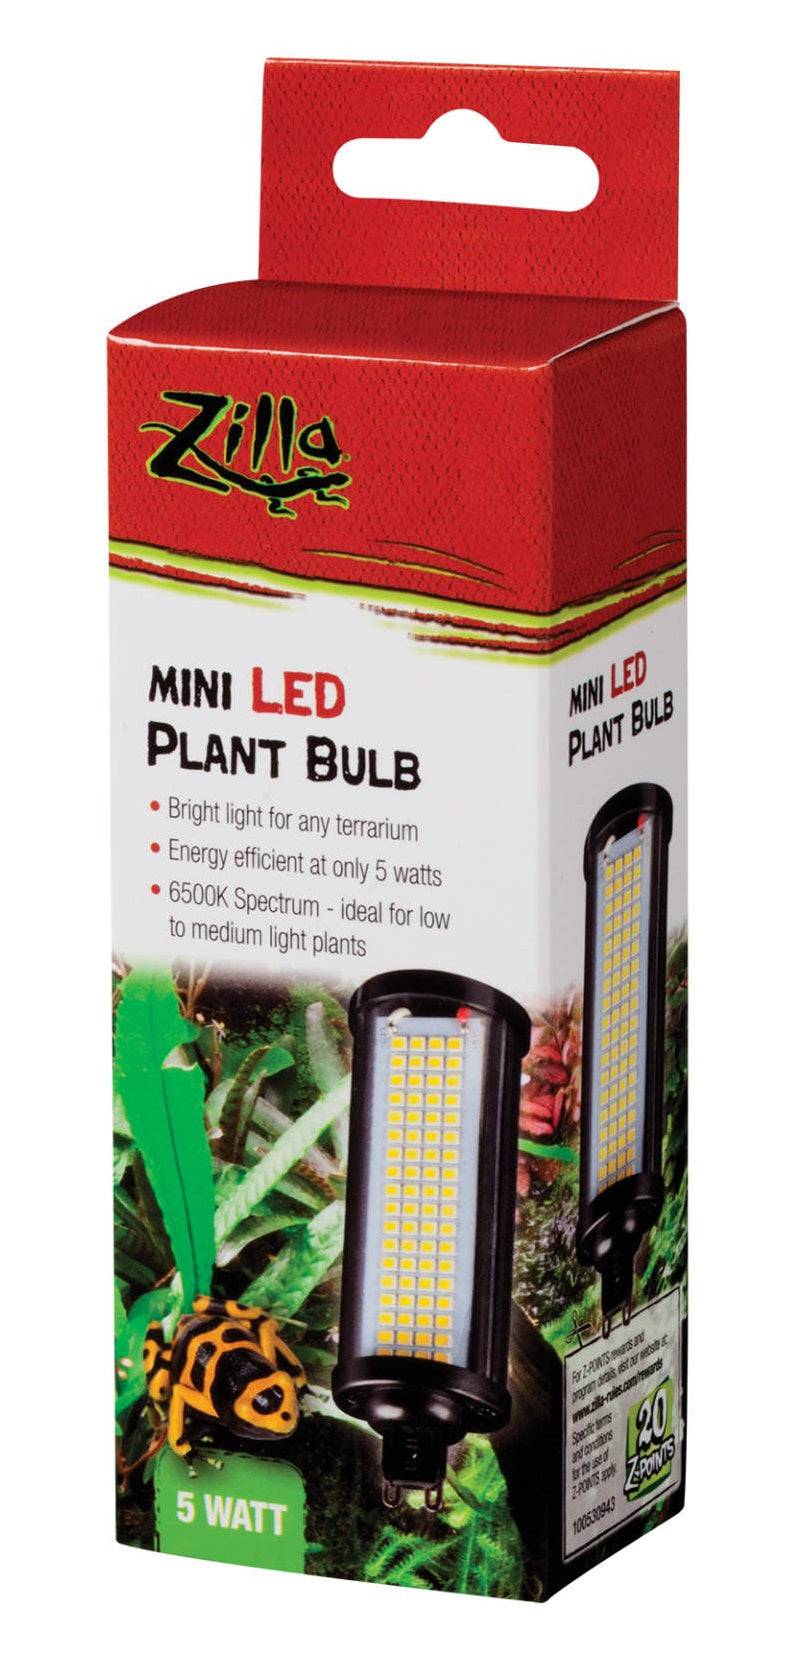 Zilla Mini LED Plant Bulb 6500K fro Low to Medium Light Plants in Terrariums